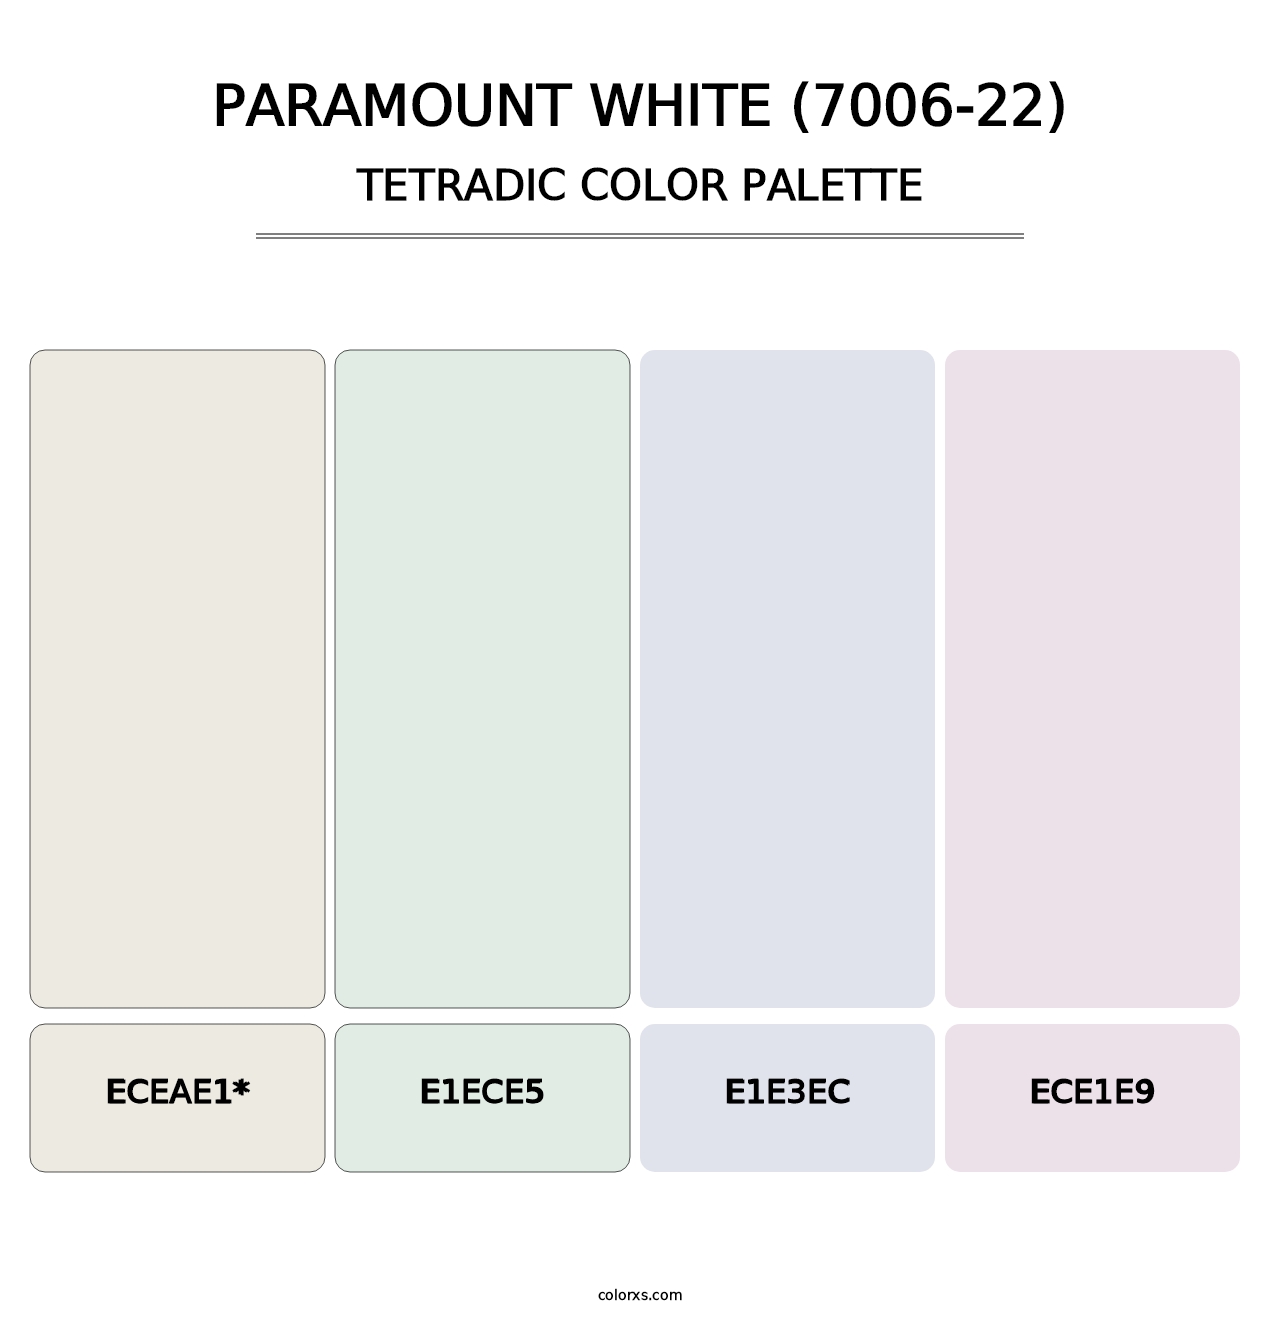 Paramount White (7006-22) - Tetradic Color Palette